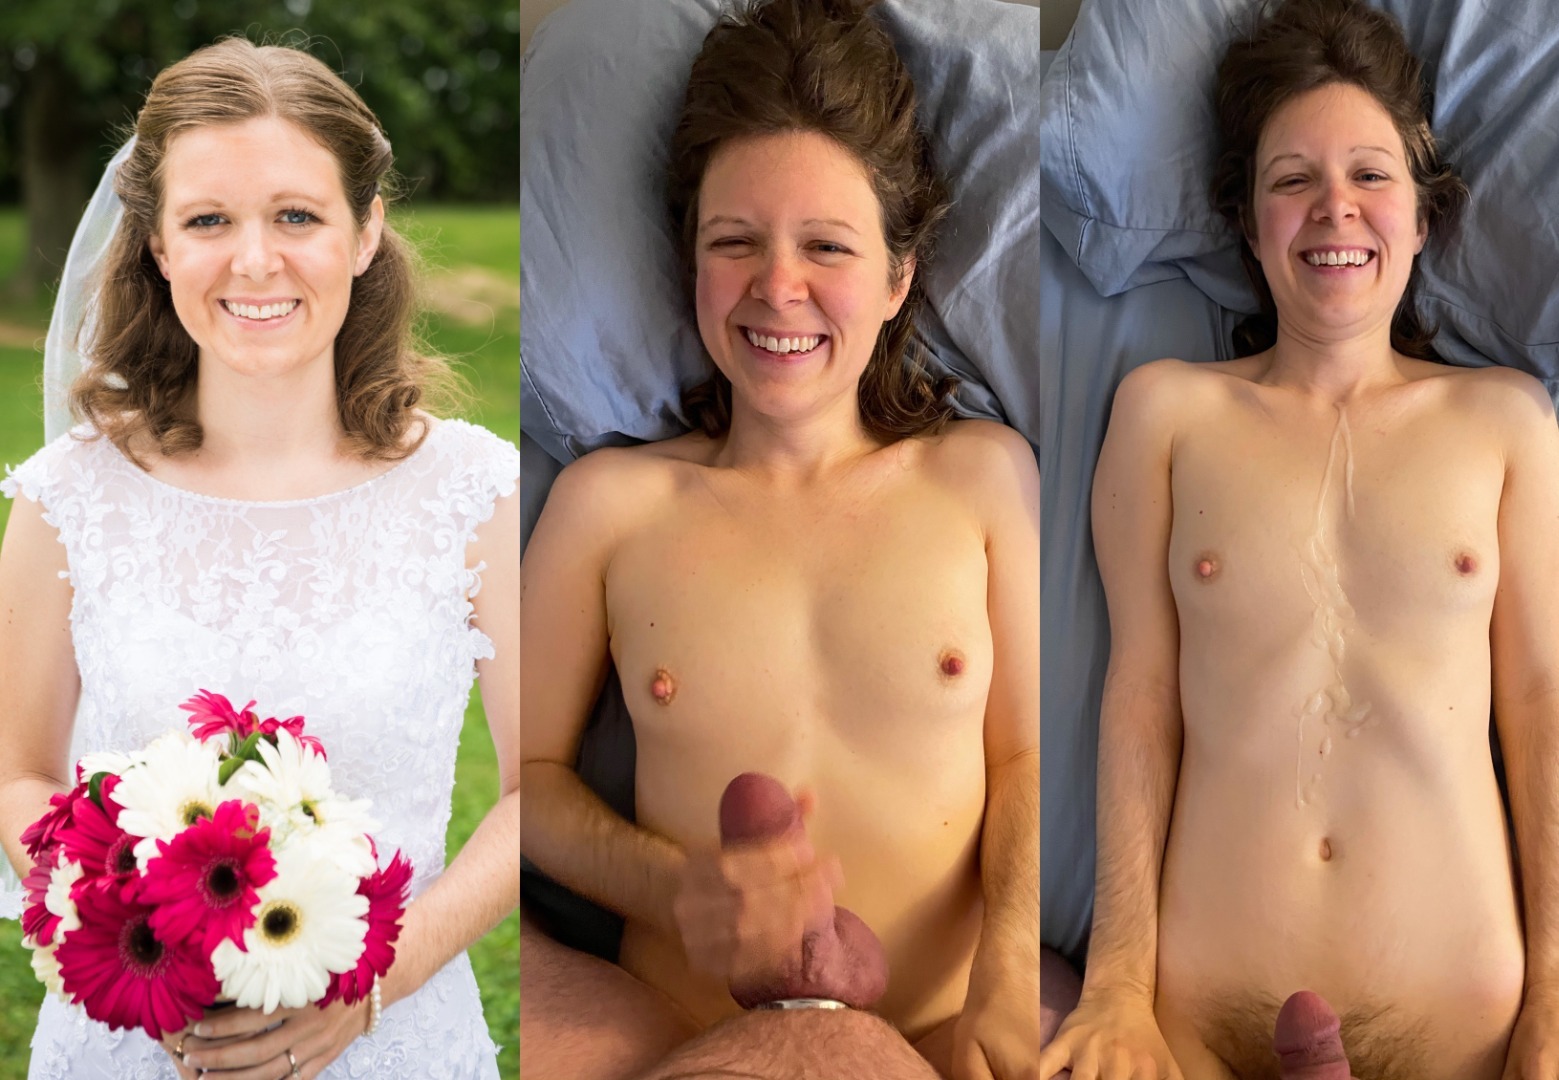 luxury teen fingering tight pussy porn video tube #Sarah #bride #handjob #cumonbody #beforeafter